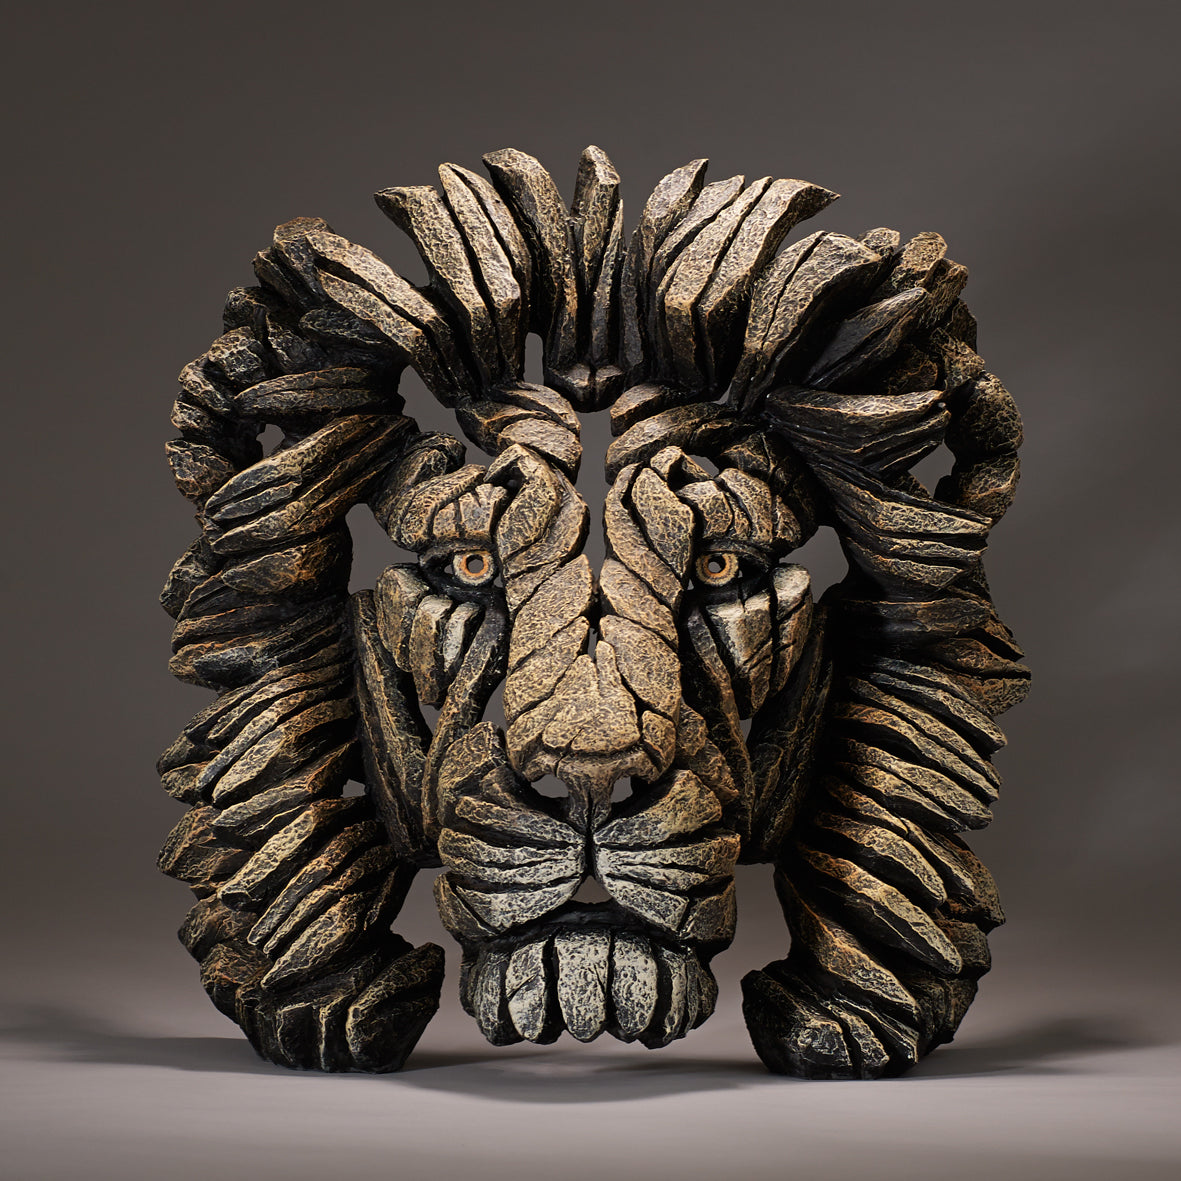 Edge Sculpture Lion Bust Savannah